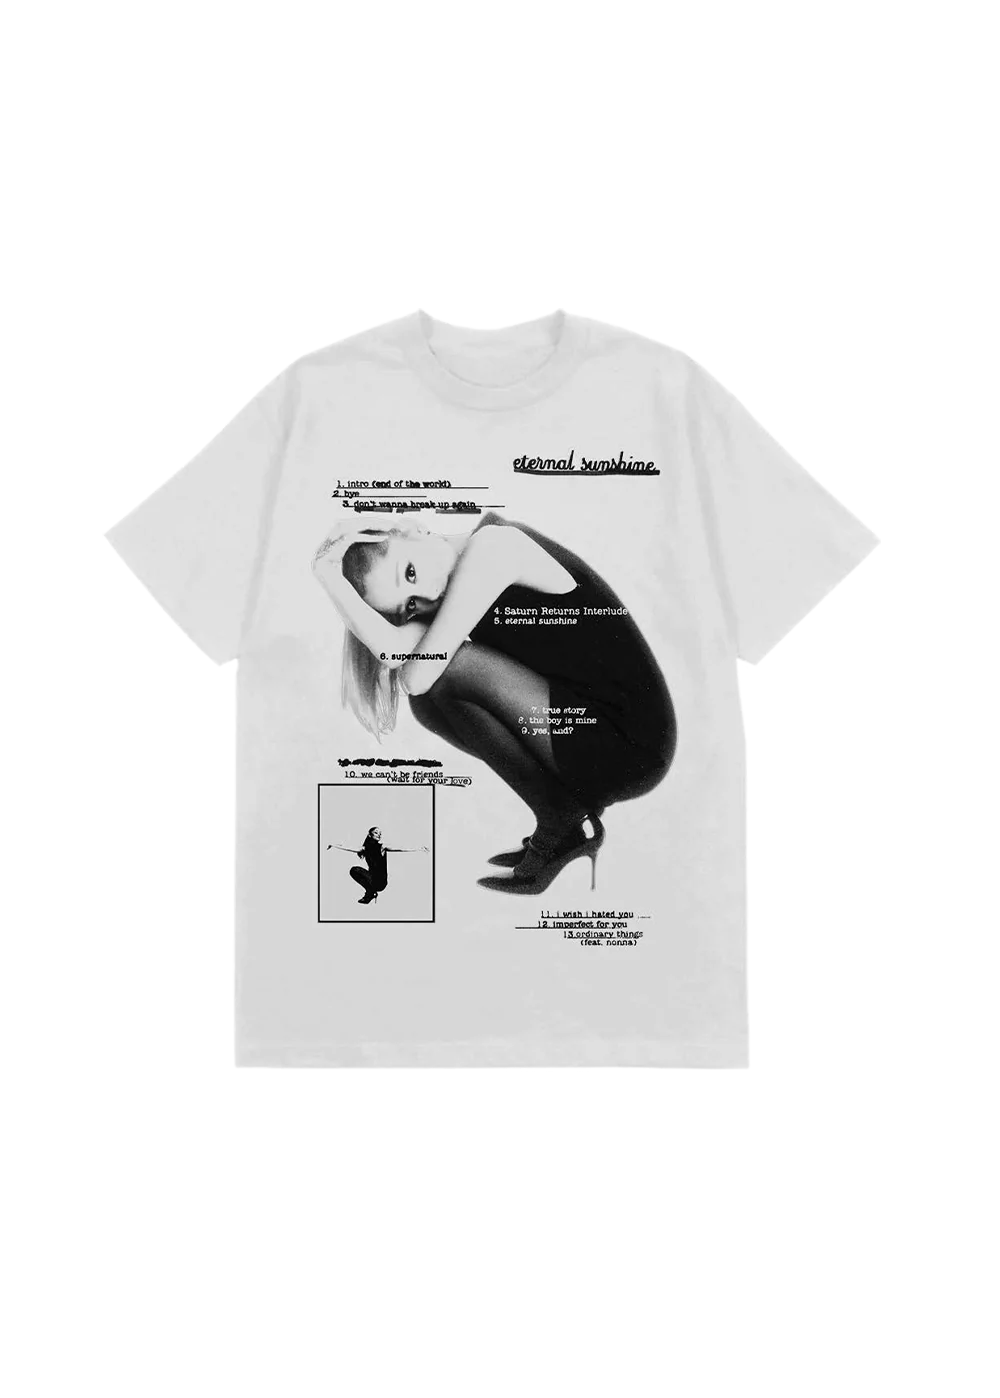 Ariana Grande - eternal sunshine tracklist white t-shirt